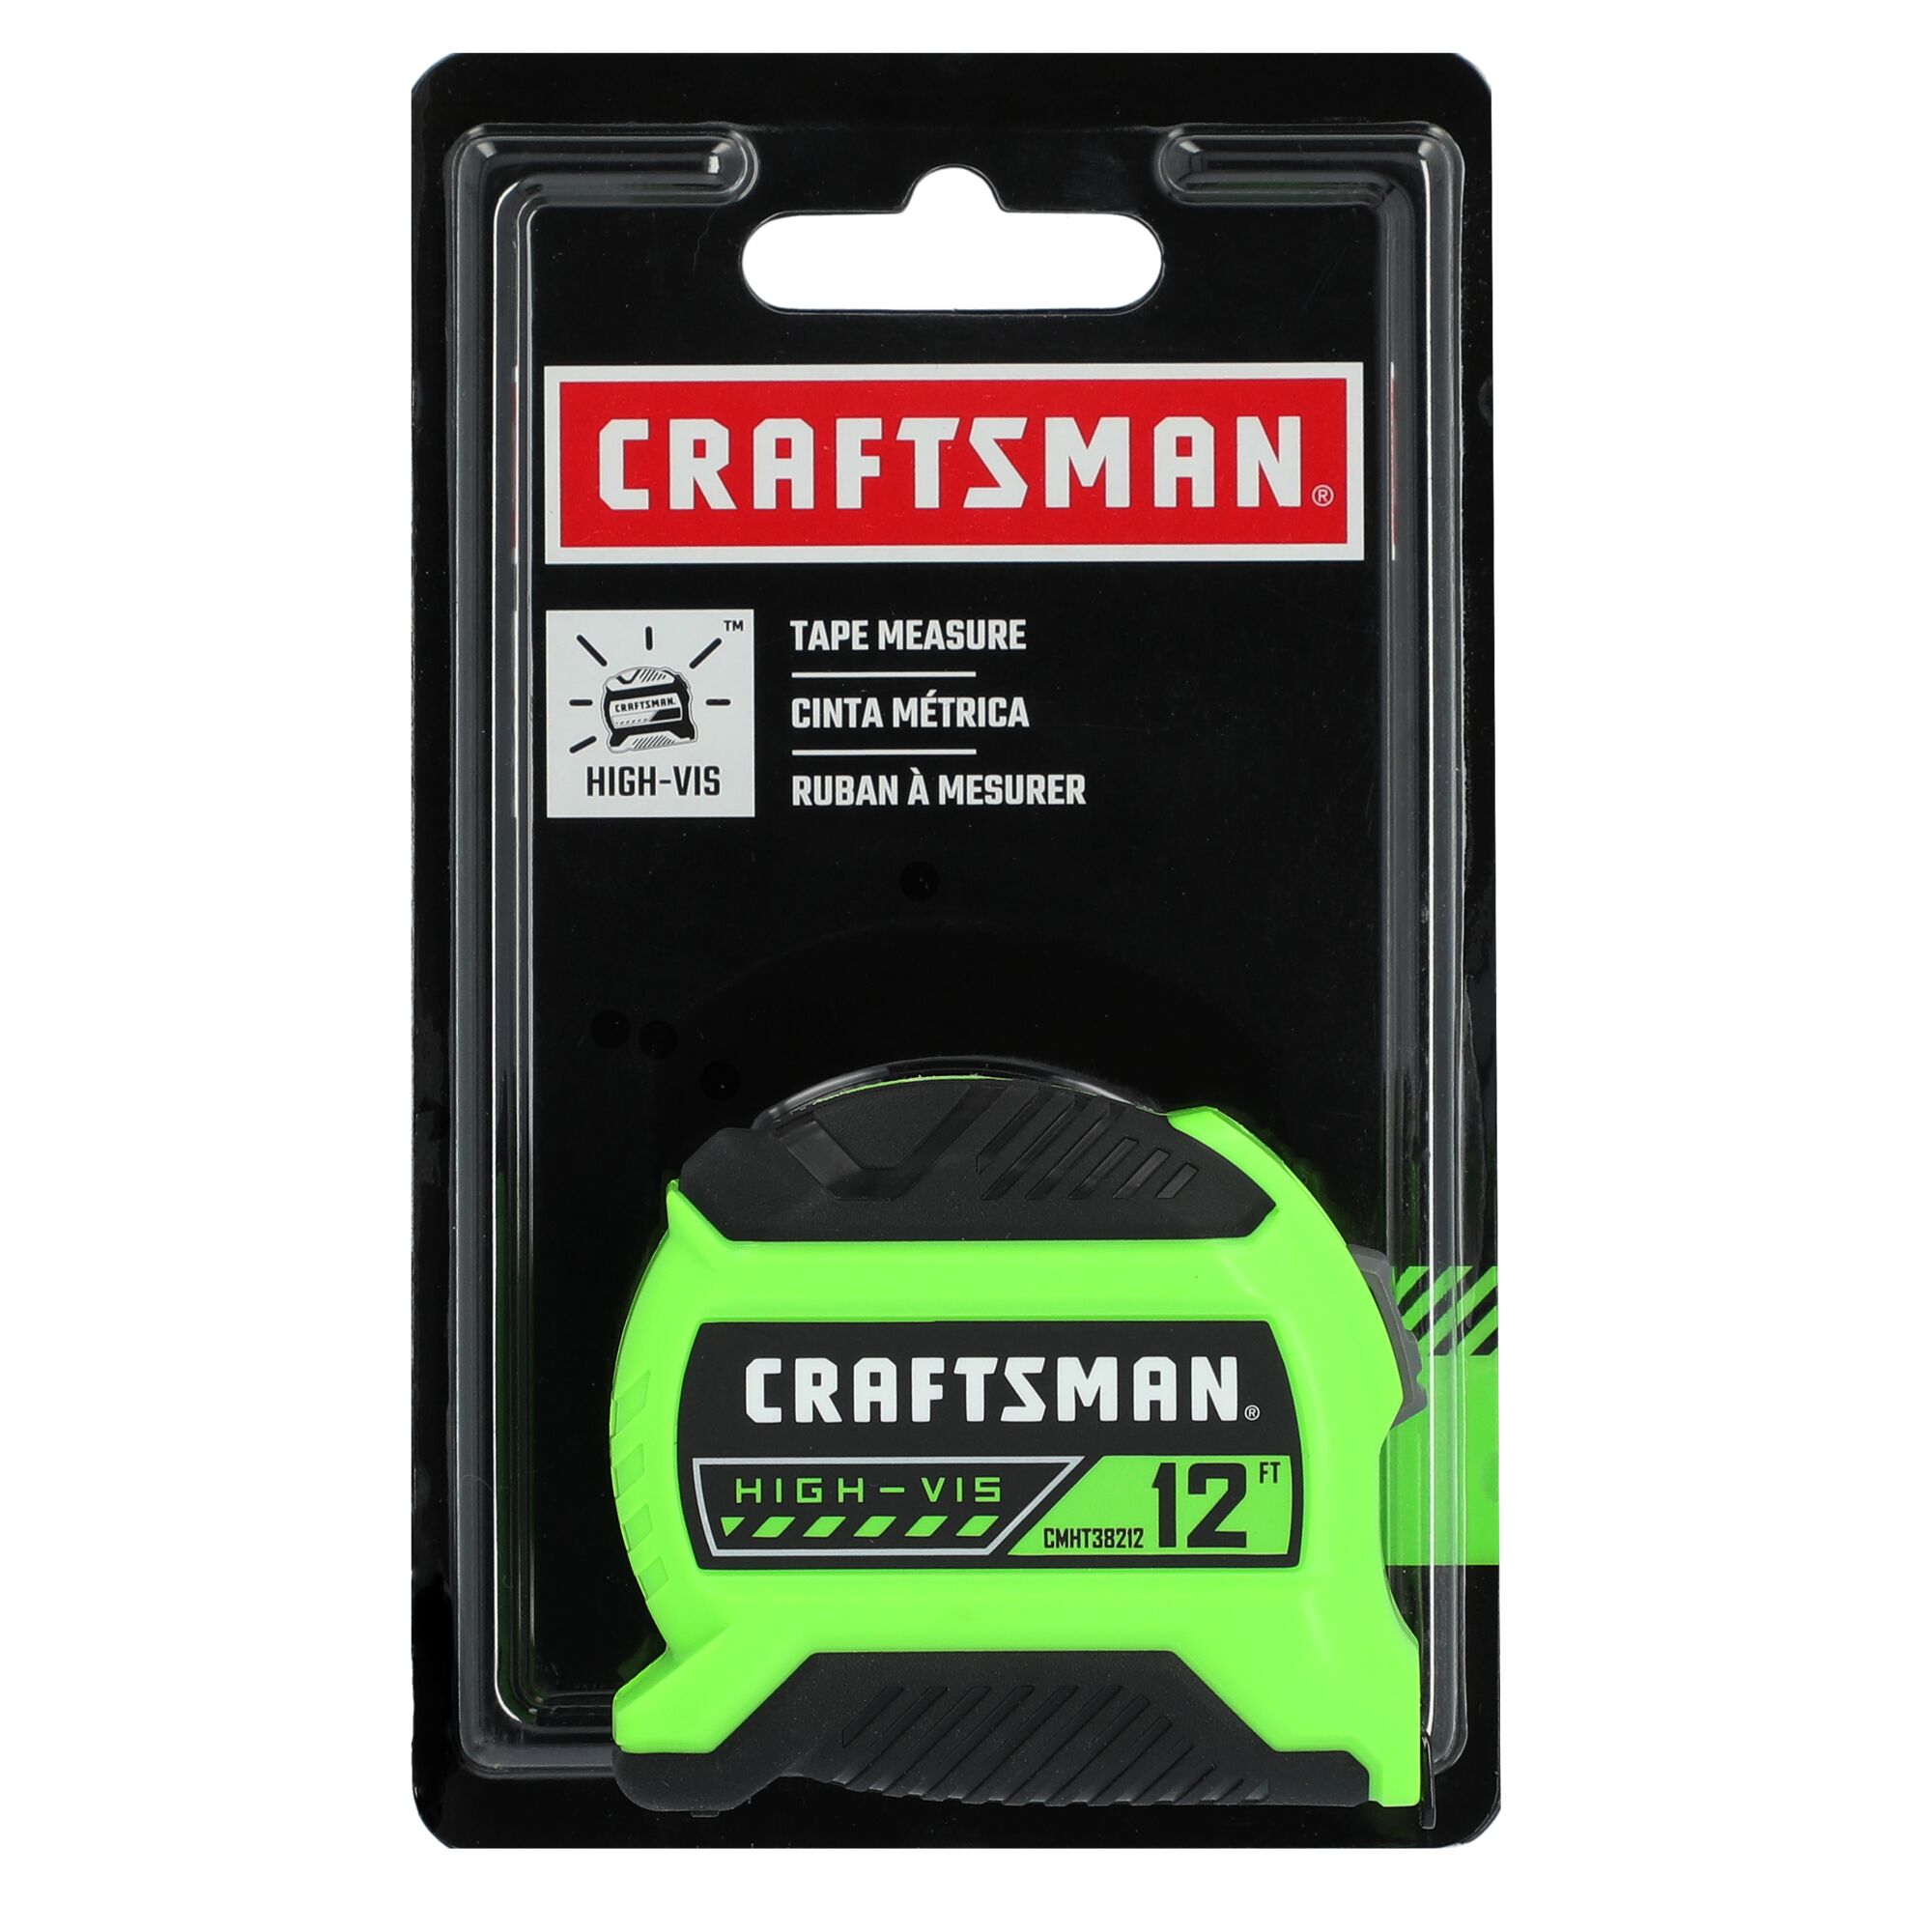 CRAFTSMAN CMHT38212S CRAFTSMAN HIGH VIS 12' TAPE MEASURE packaging view.